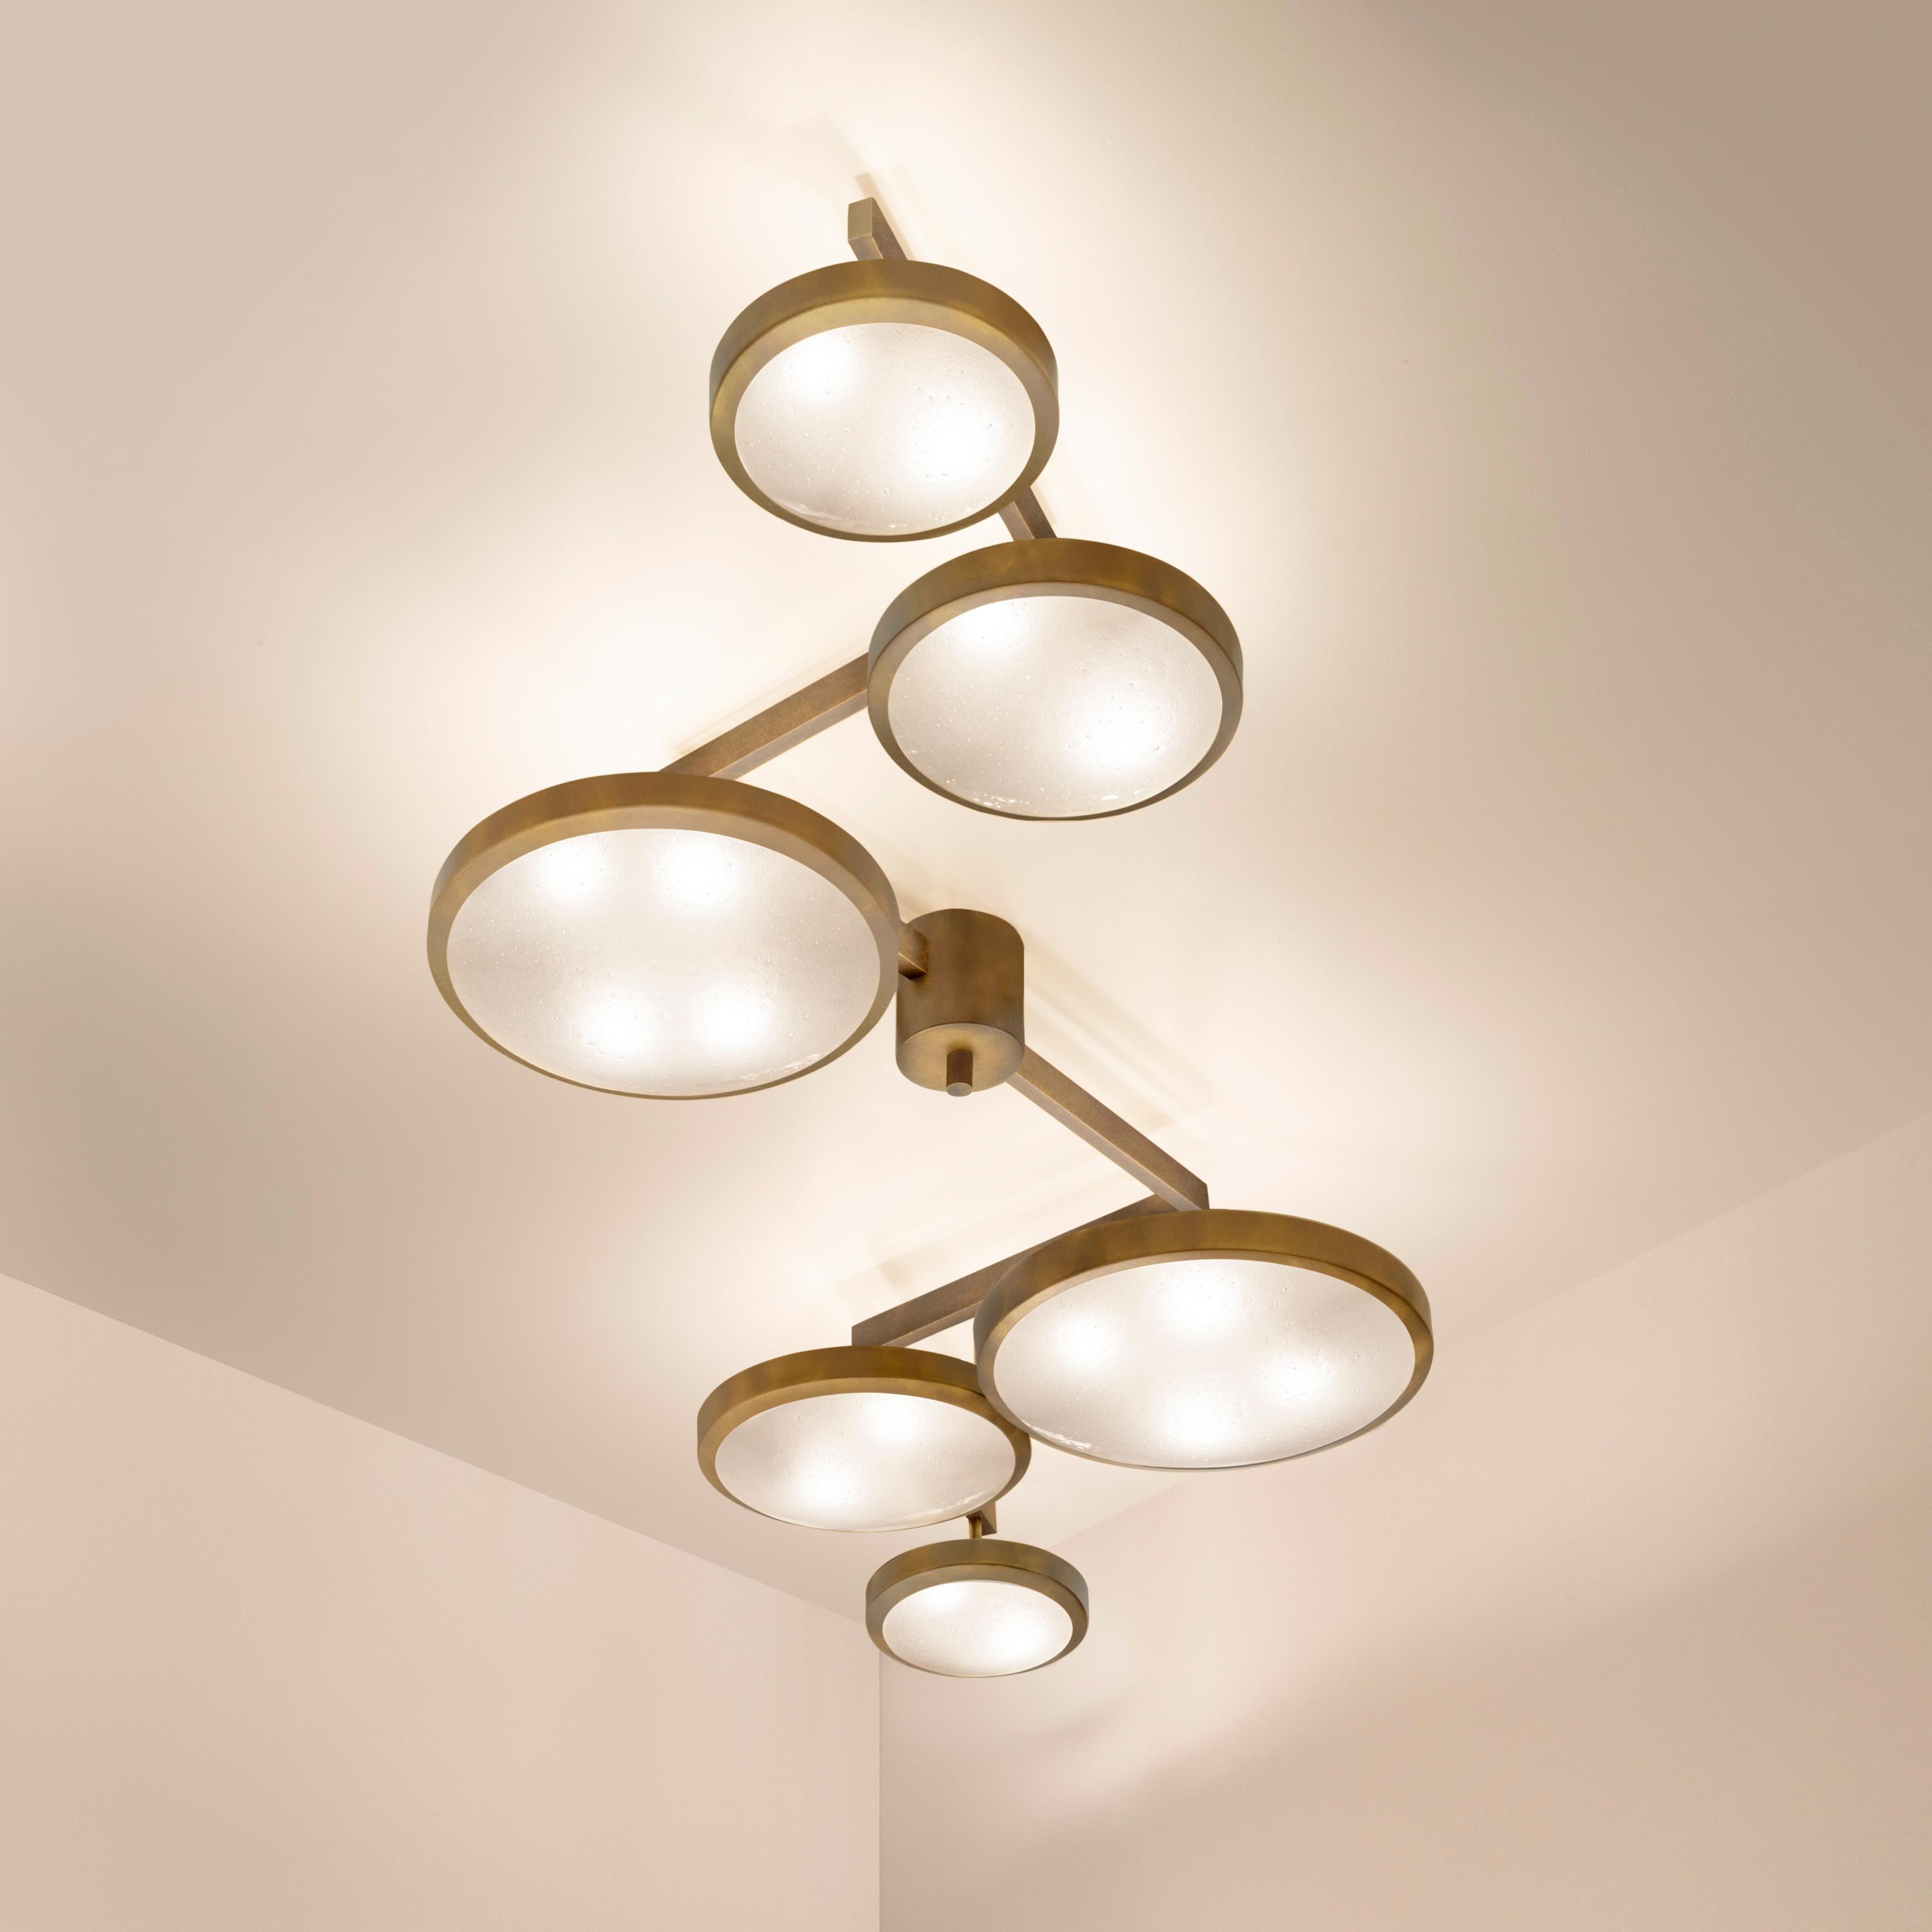 Geometria Sospesa Ceiling Light by Gaspare Asaro - Polished Brass For Sale 9